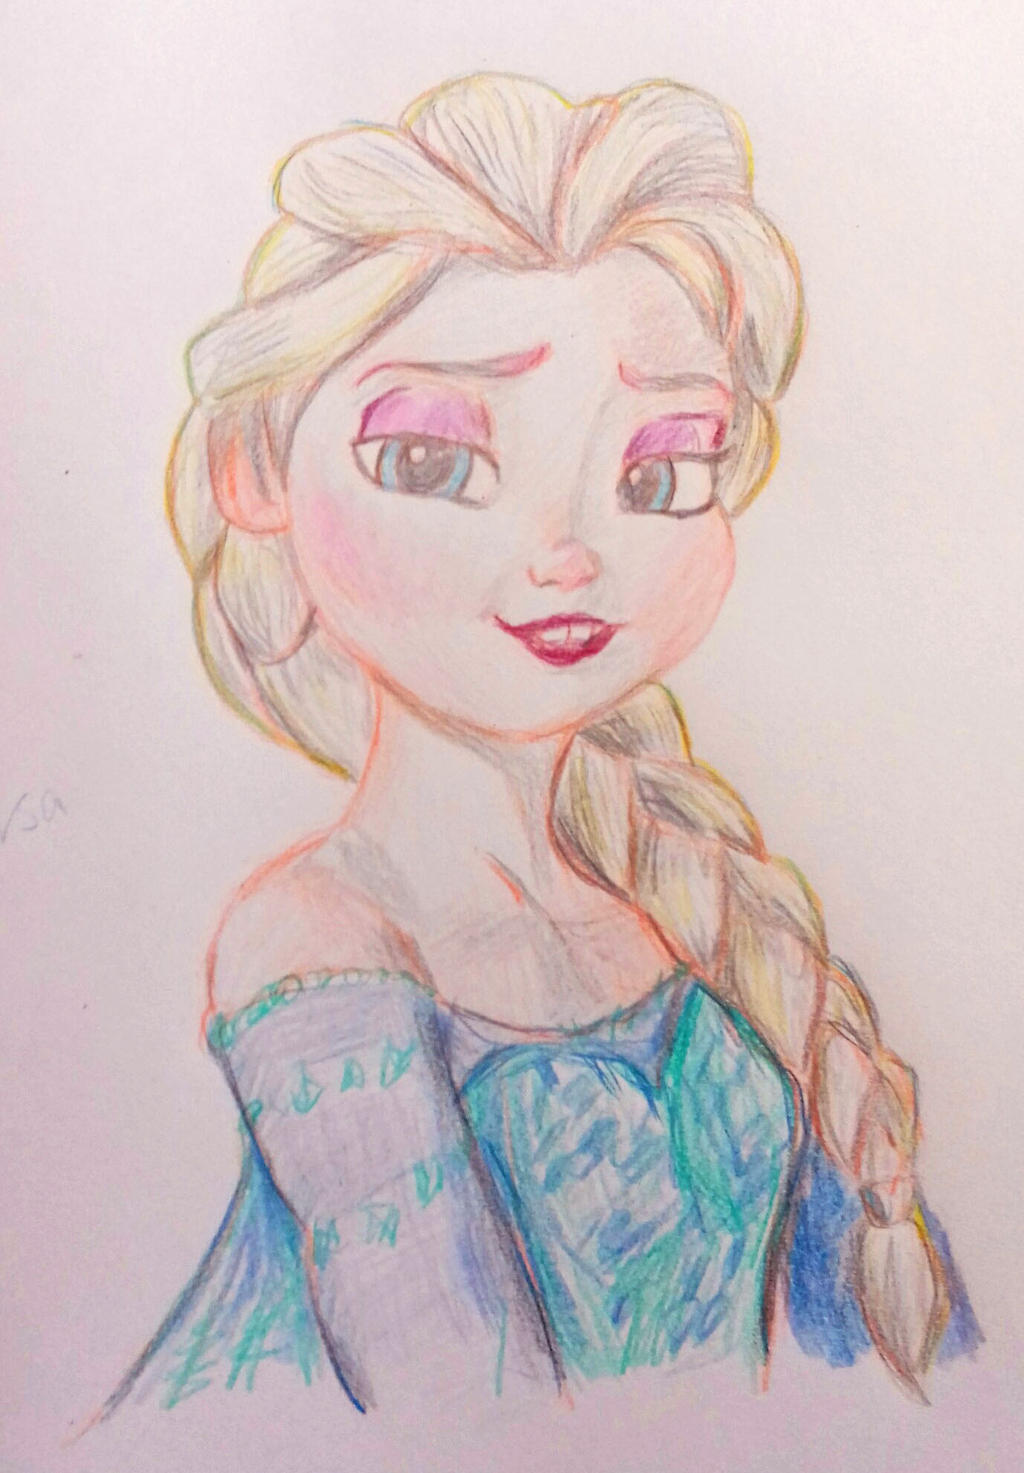 Elsa Frozen Pencil Sketch by LovelessNights on DeviantArt